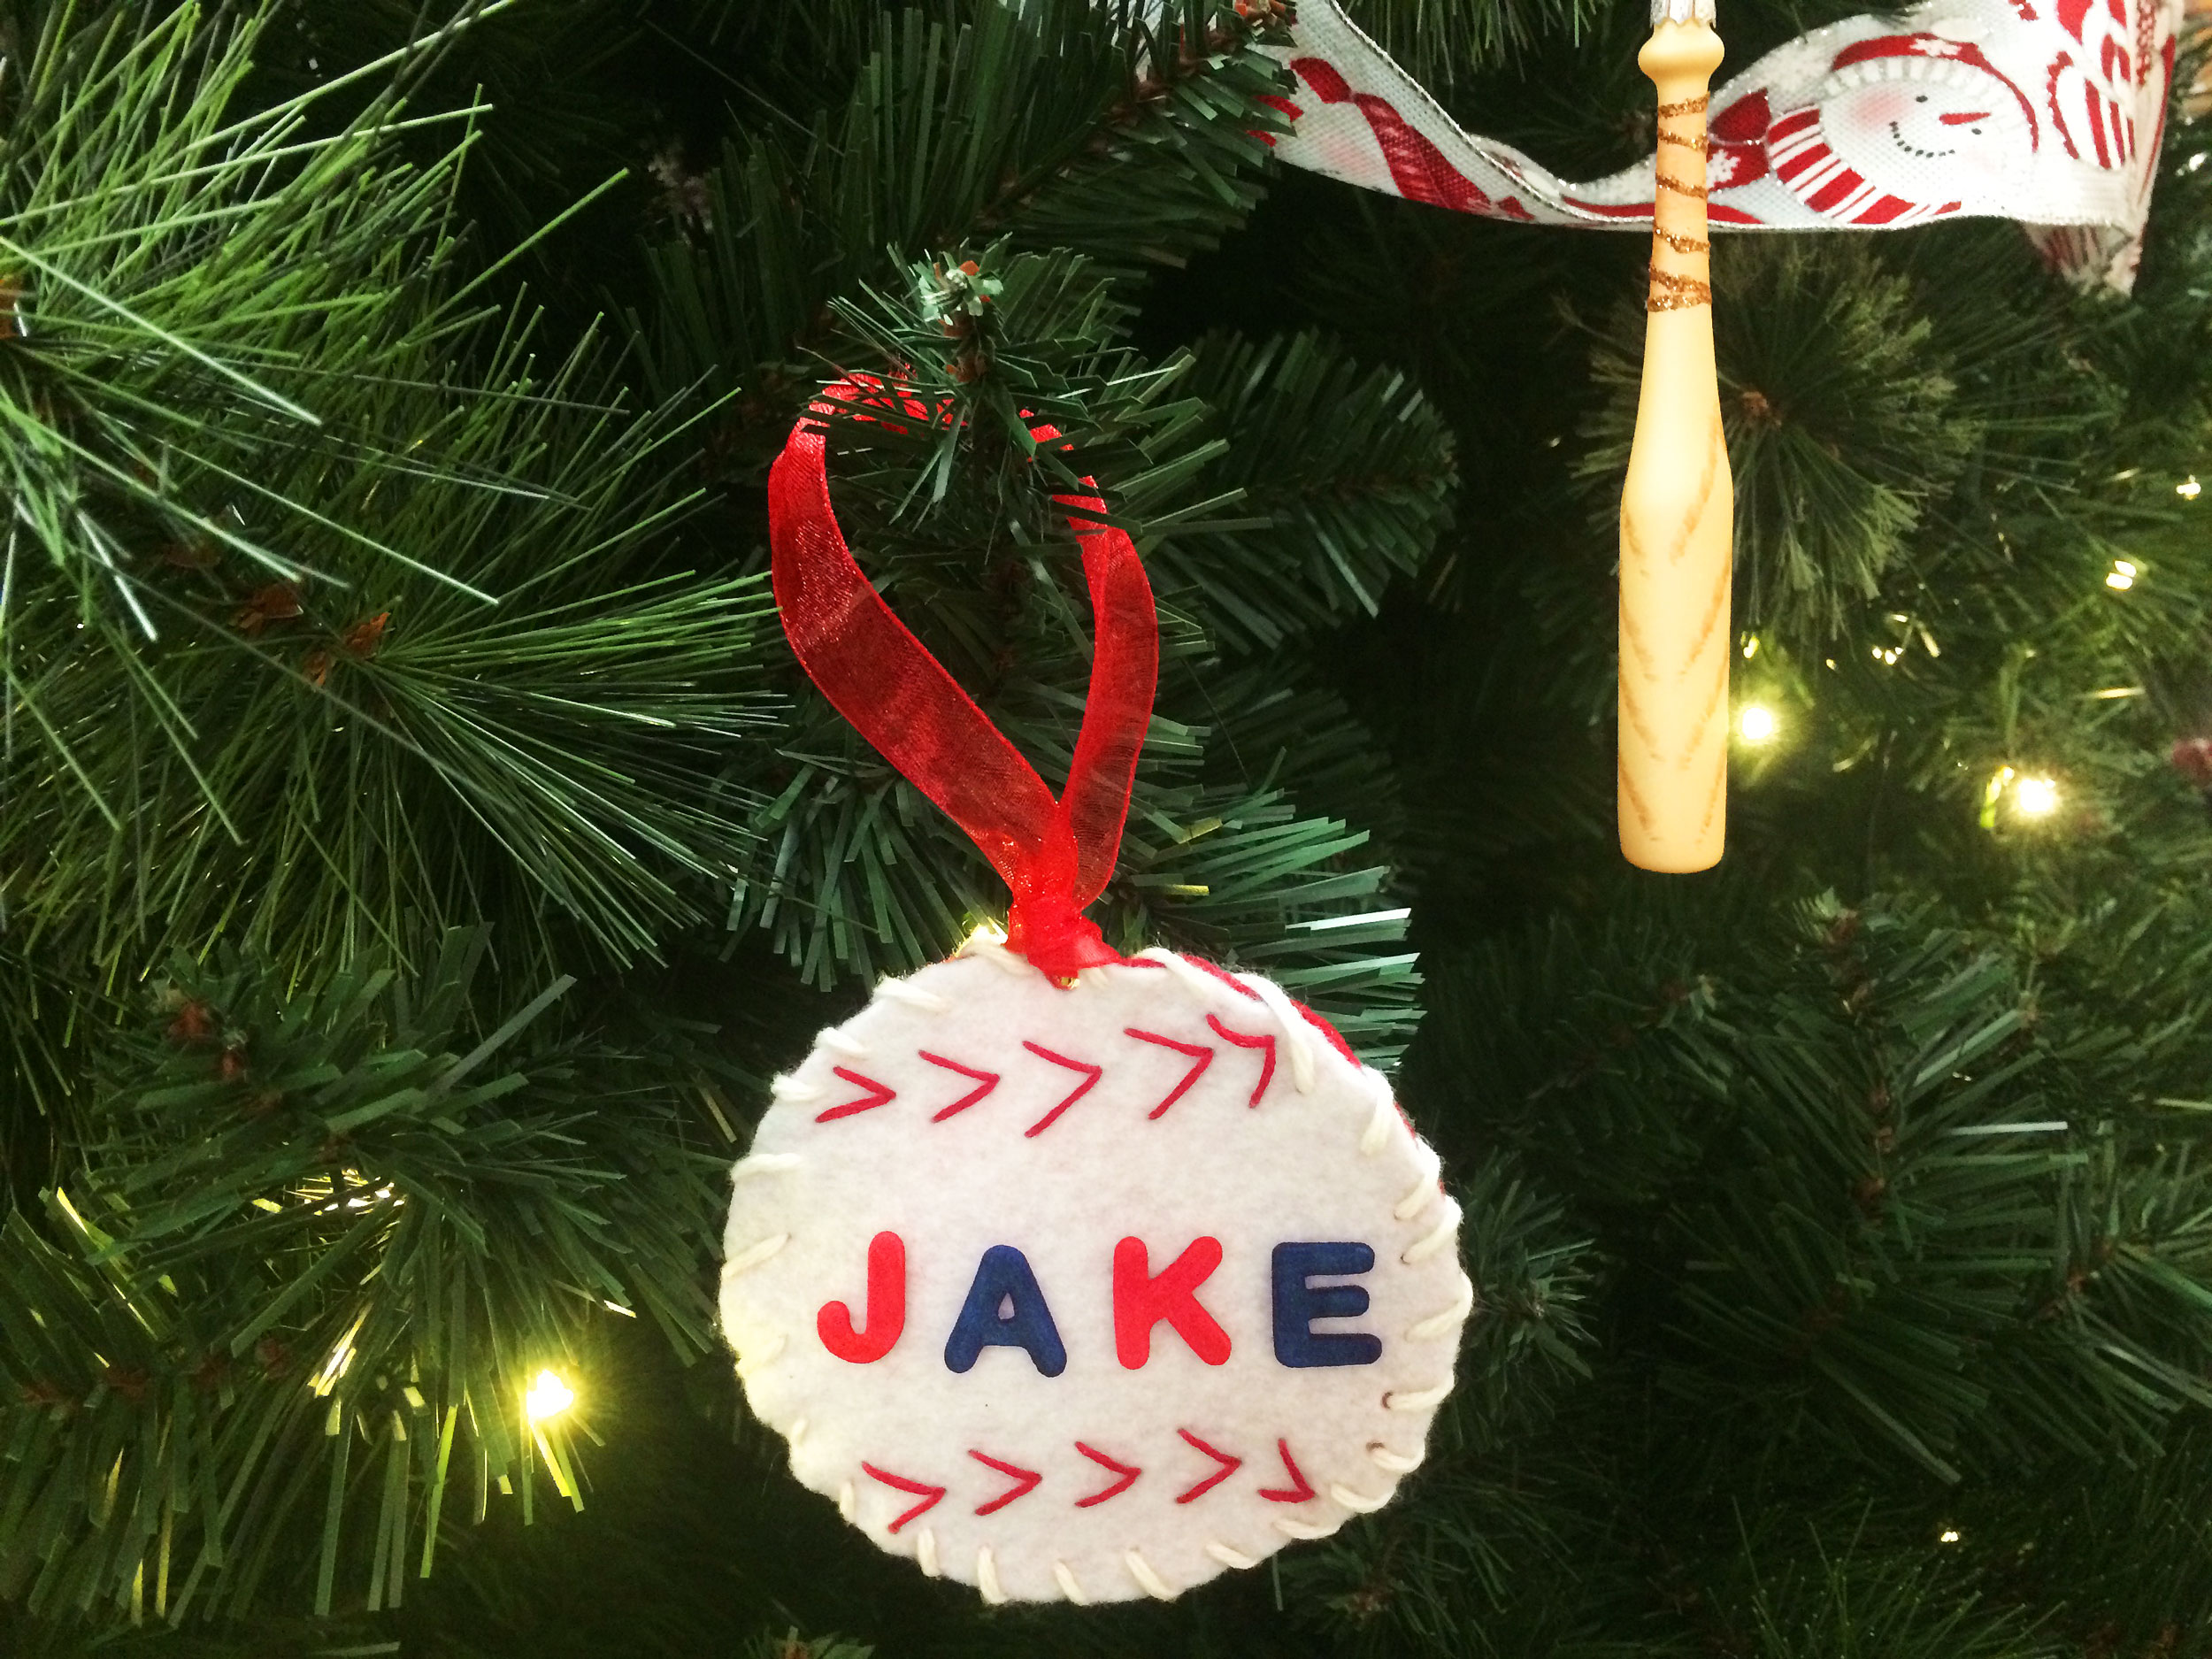 Finished DIY baseball ornament hanging on Christmas tree. | OrnamentShop.com